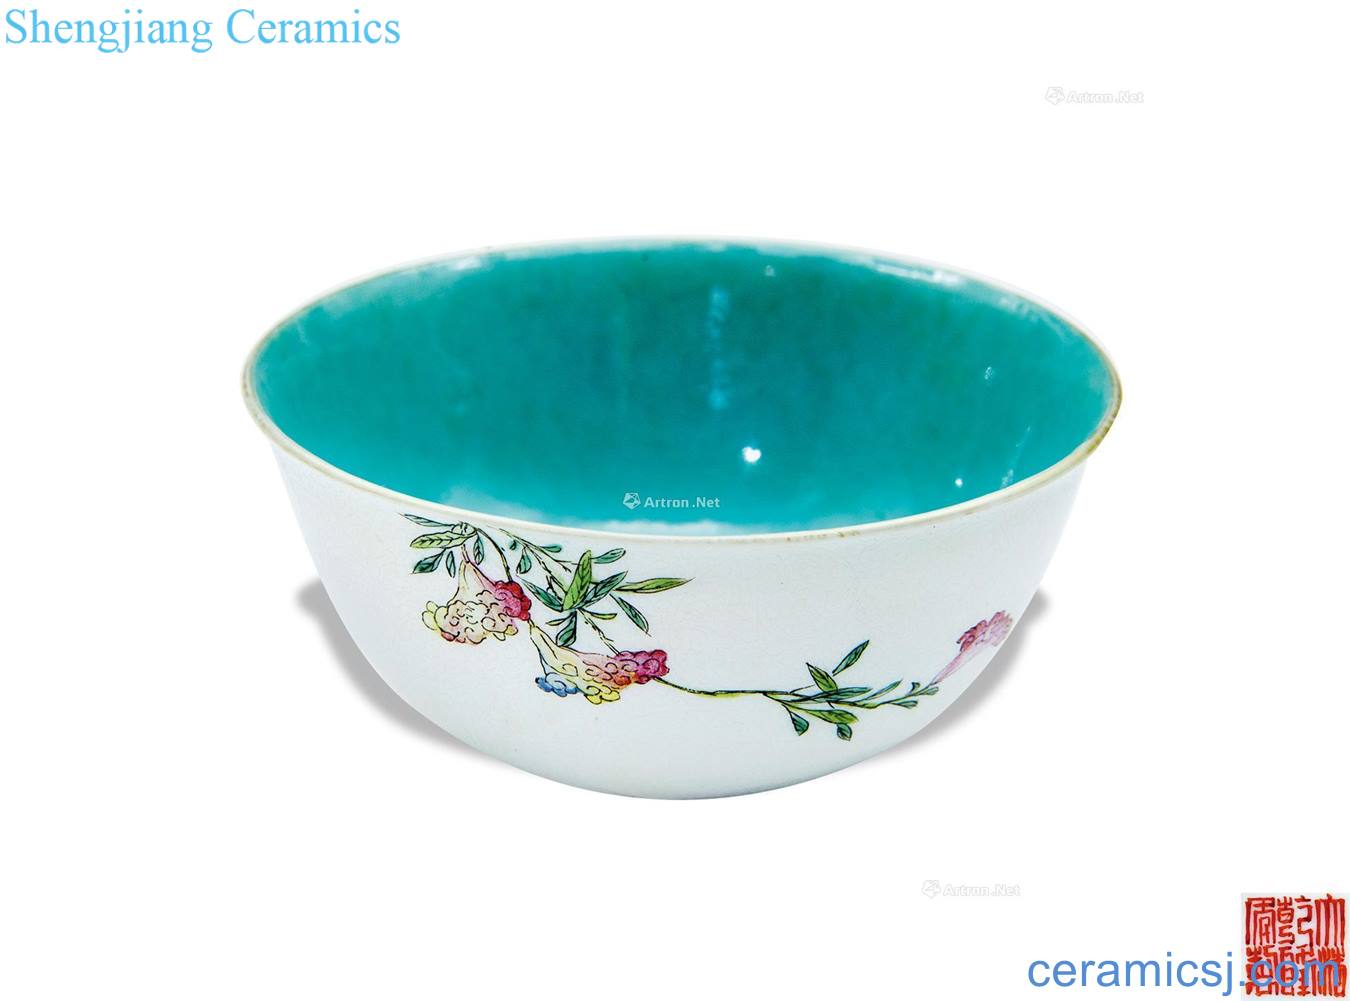 Qianlong pastel rolling, folding branches flowers green-splashed bowls